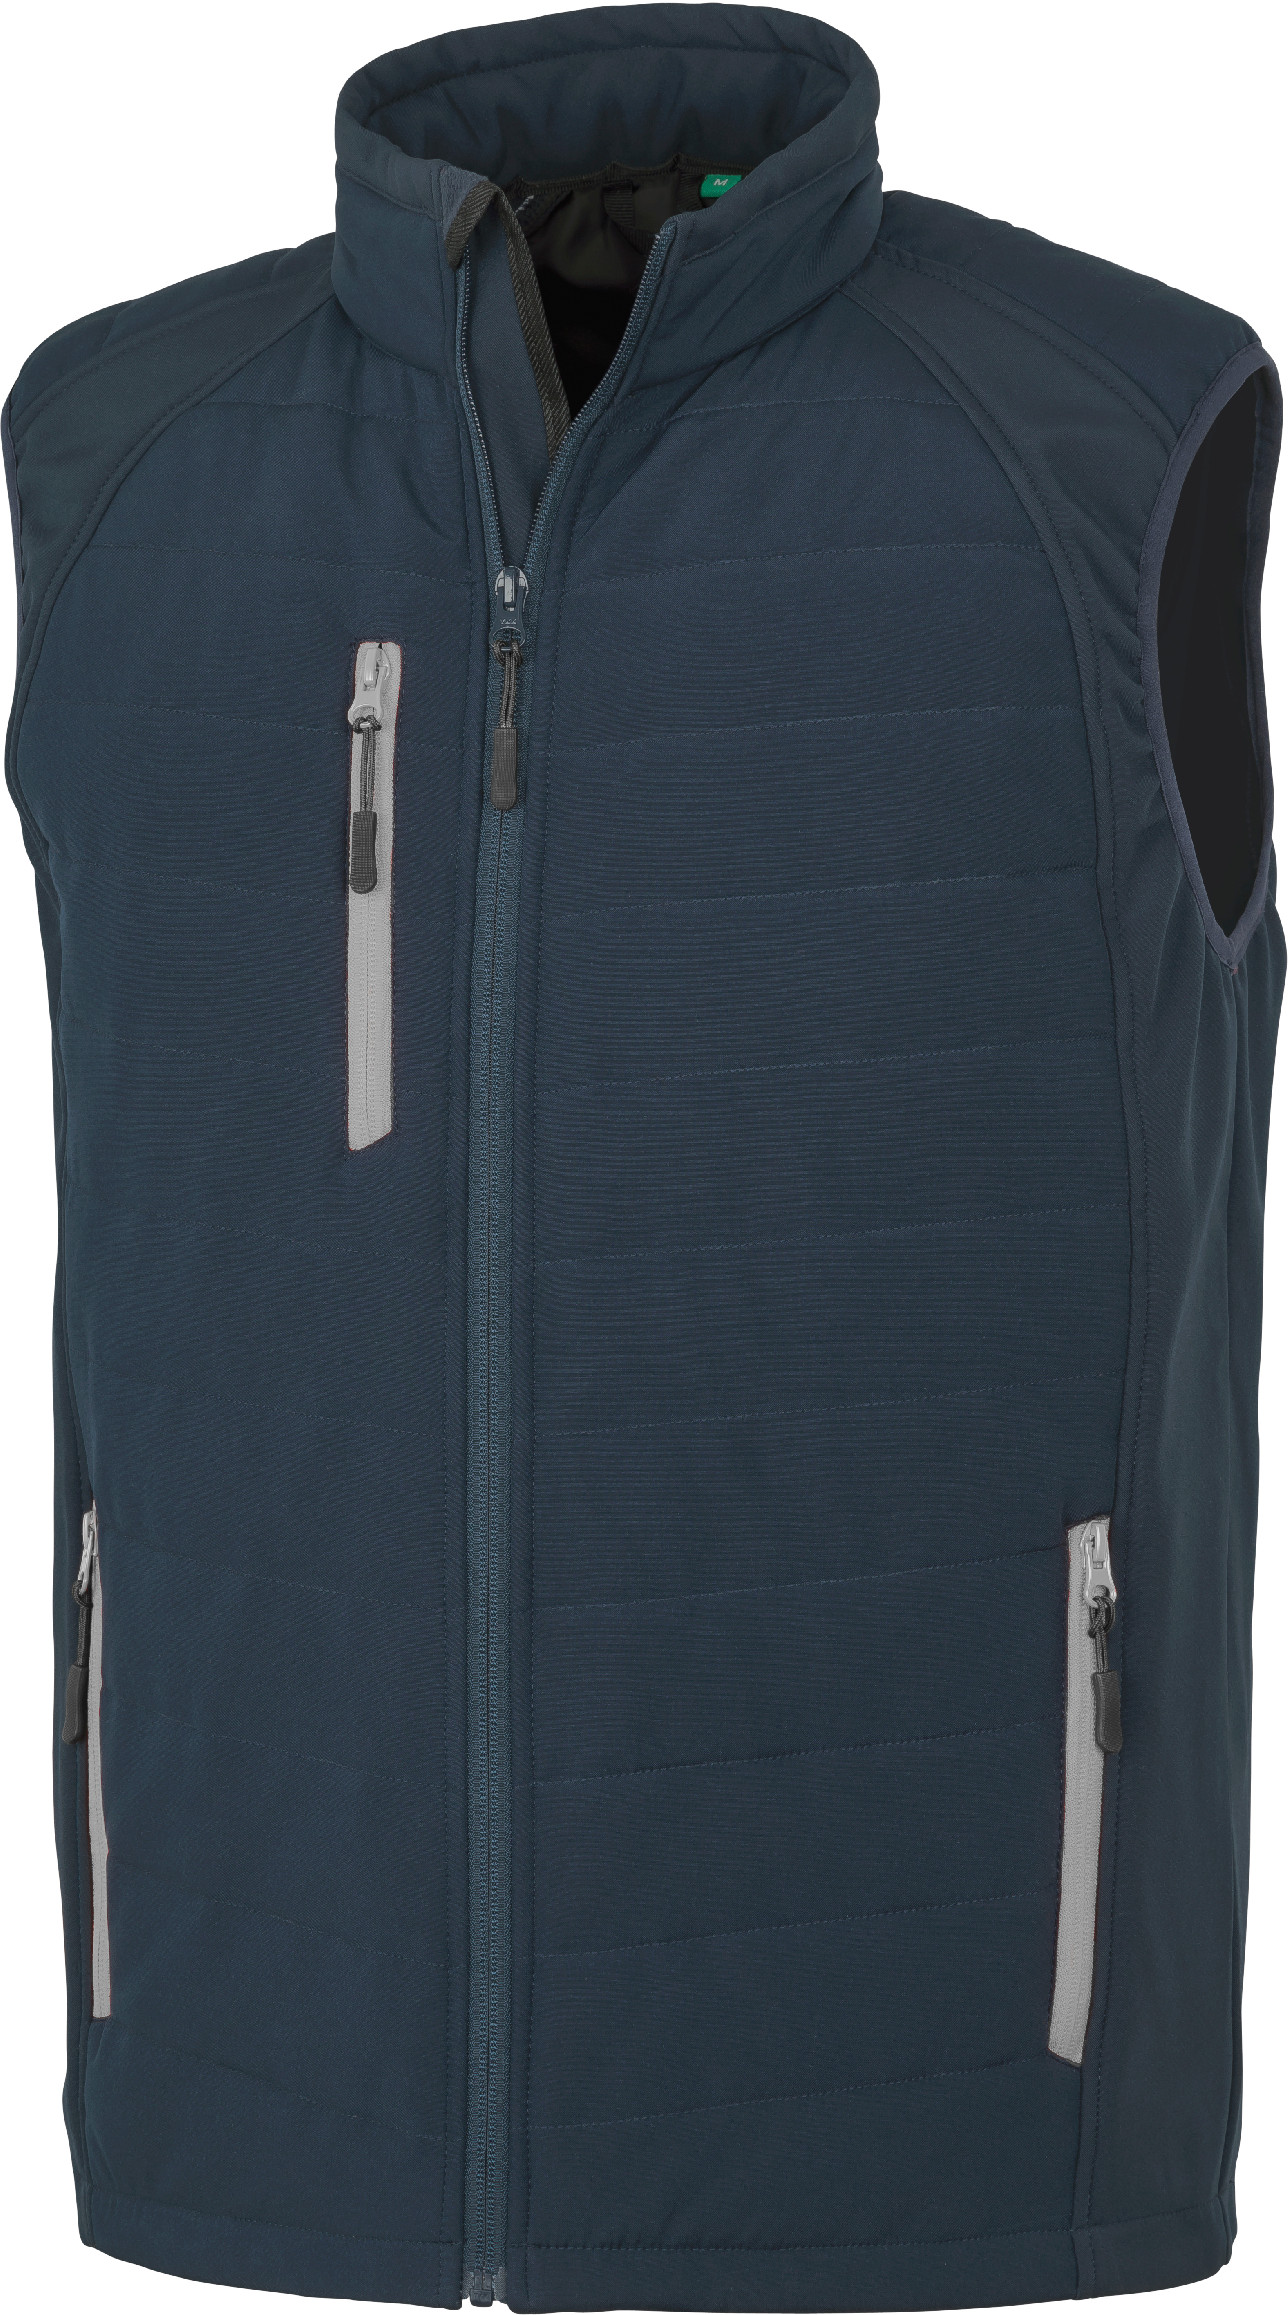 Polstrovaná softshell vesta Compass R238X Barva: námořní modrá-šedá, Velikost: M